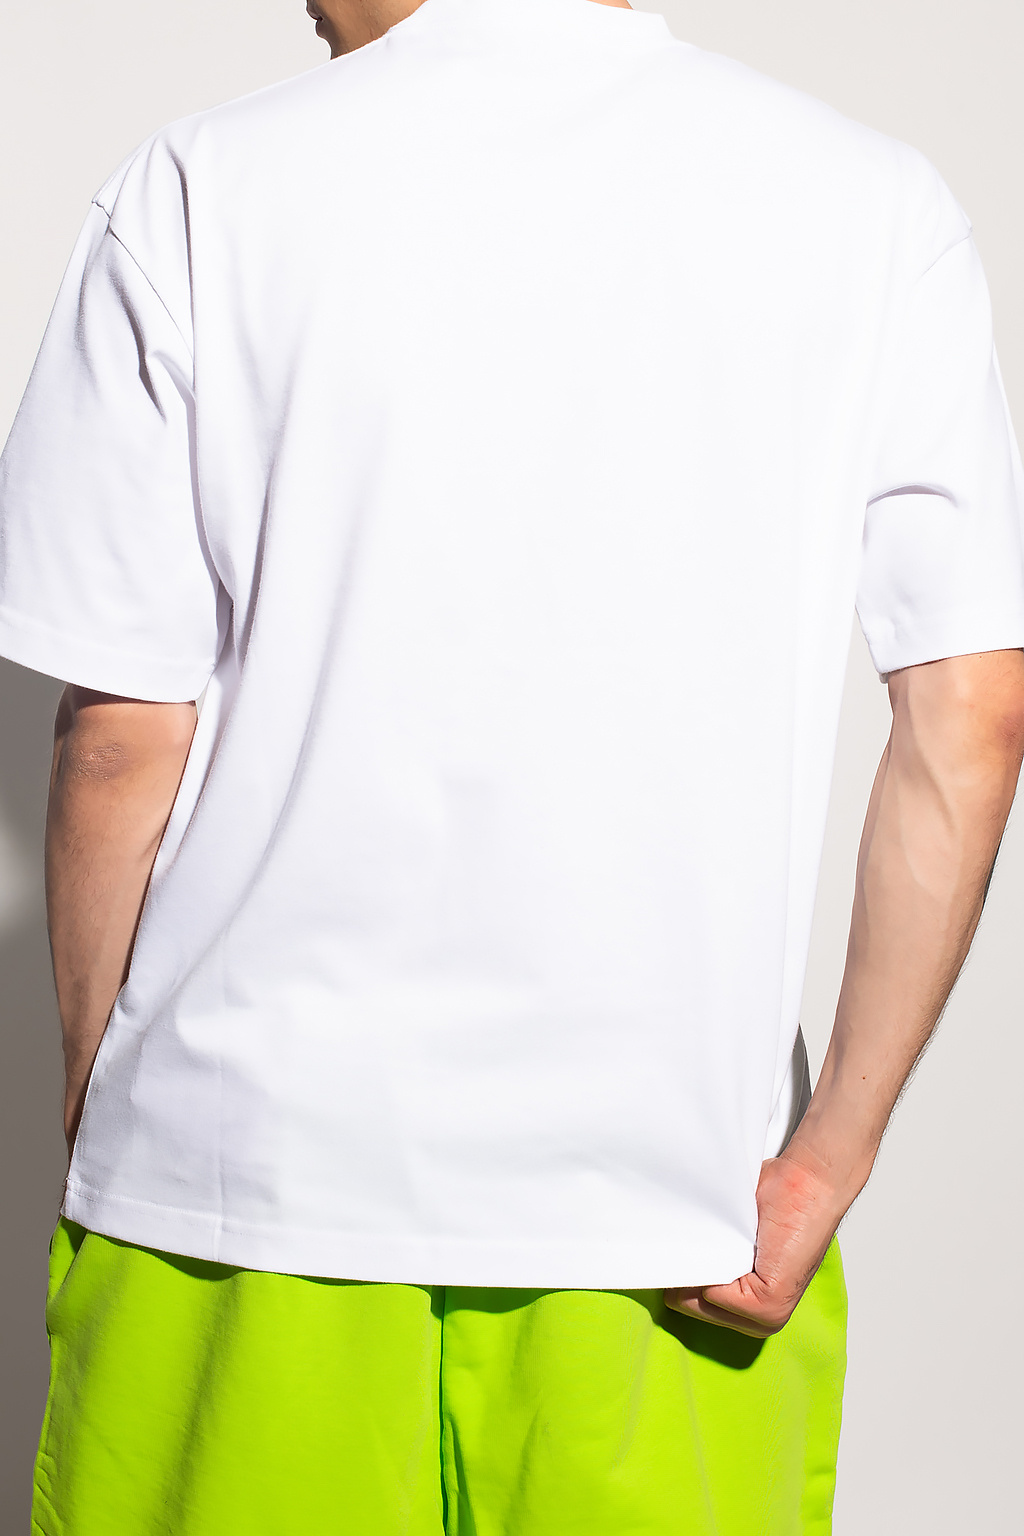 BALENCIAGA: cotton t-shirt with logo - Red  Balenciaga t-shirt 612965TLVJ1  online at